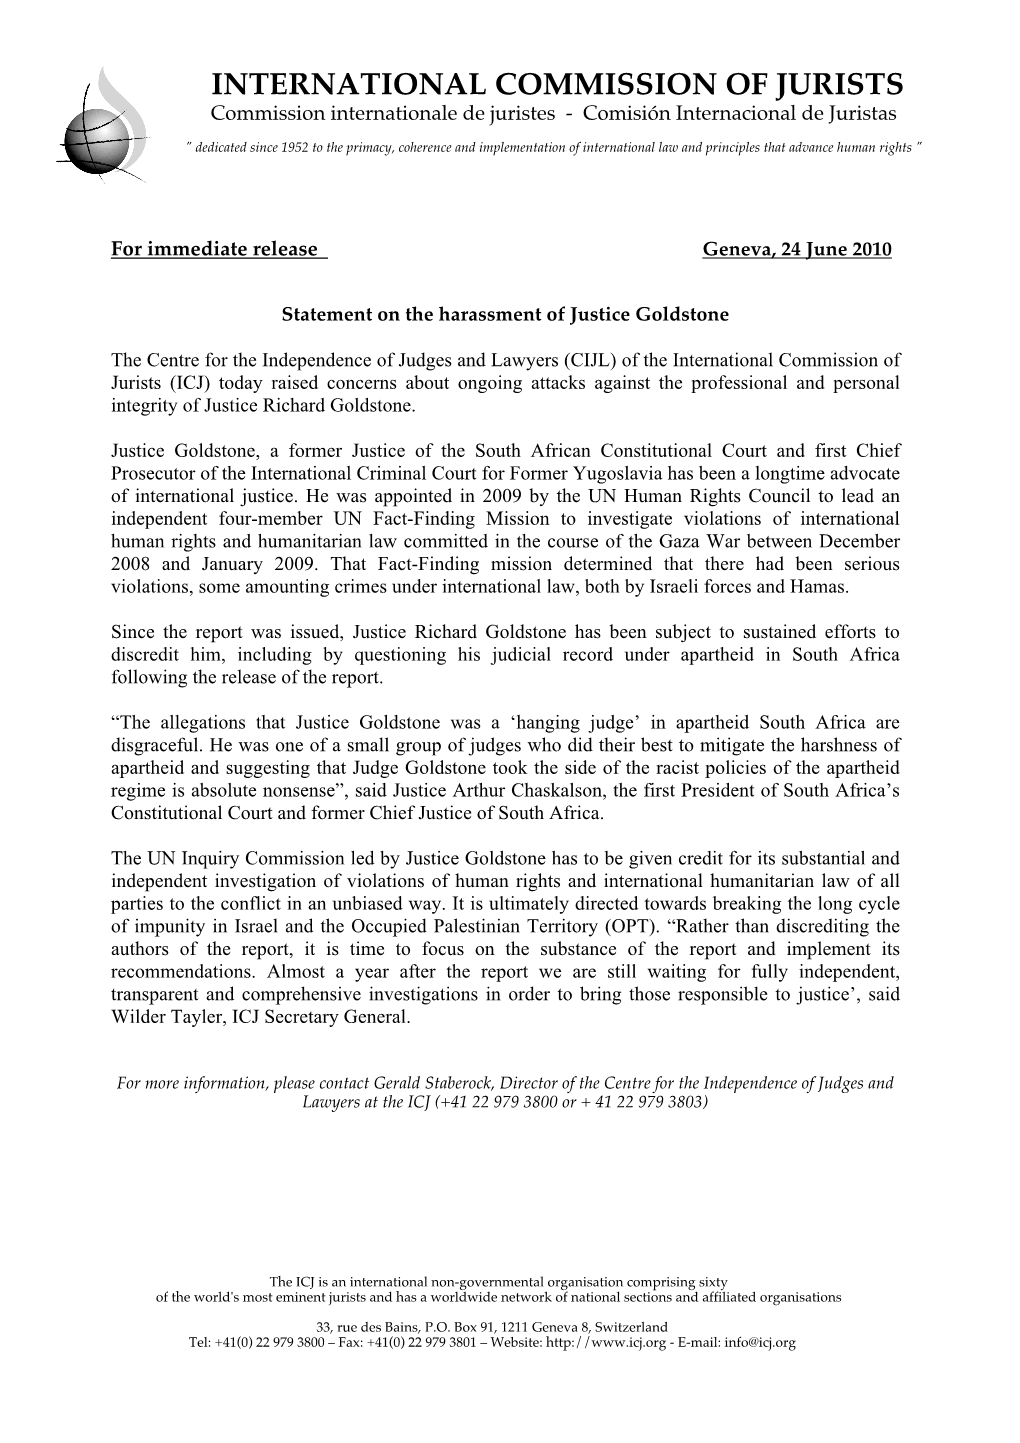 OPT-Statement Harassment Goldstone-Press Release-2010